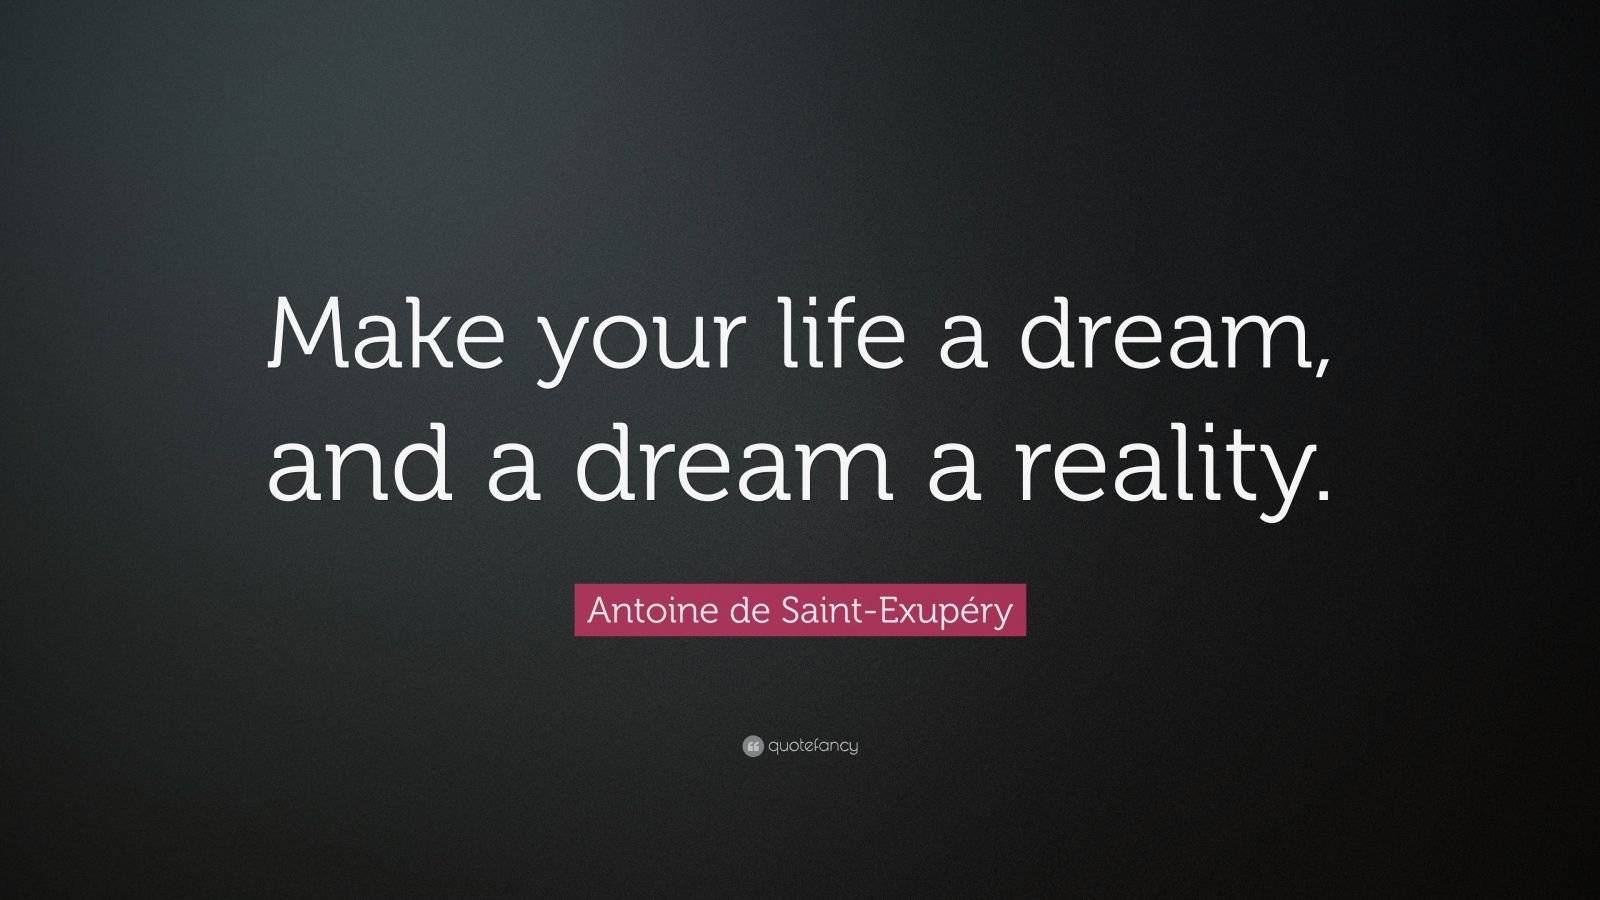 Antoine de Saint-Exupéry Quote: “Make your life a dream, and a dream a reality ...1600 x 900